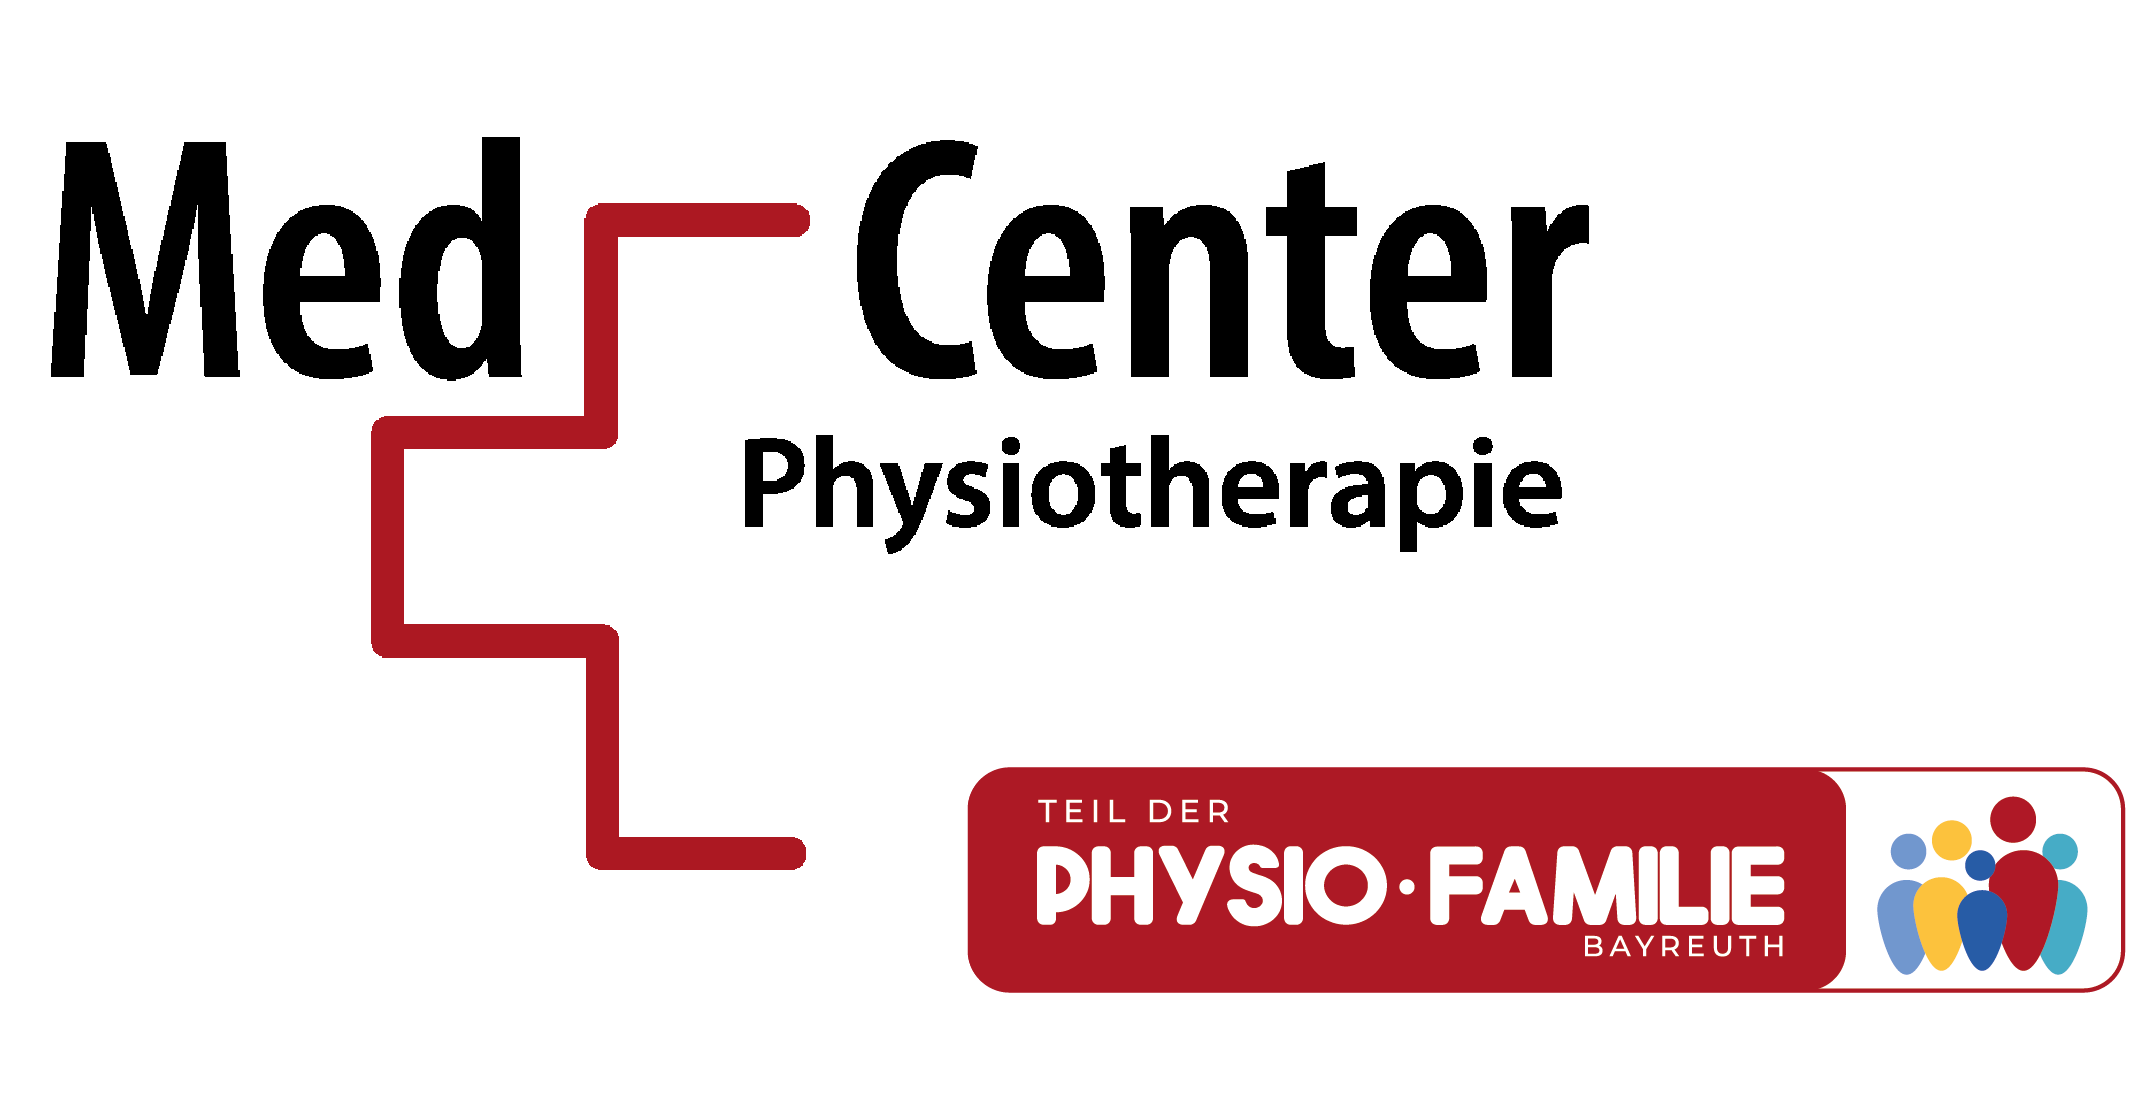 Medcenter Physiotherapie Logo